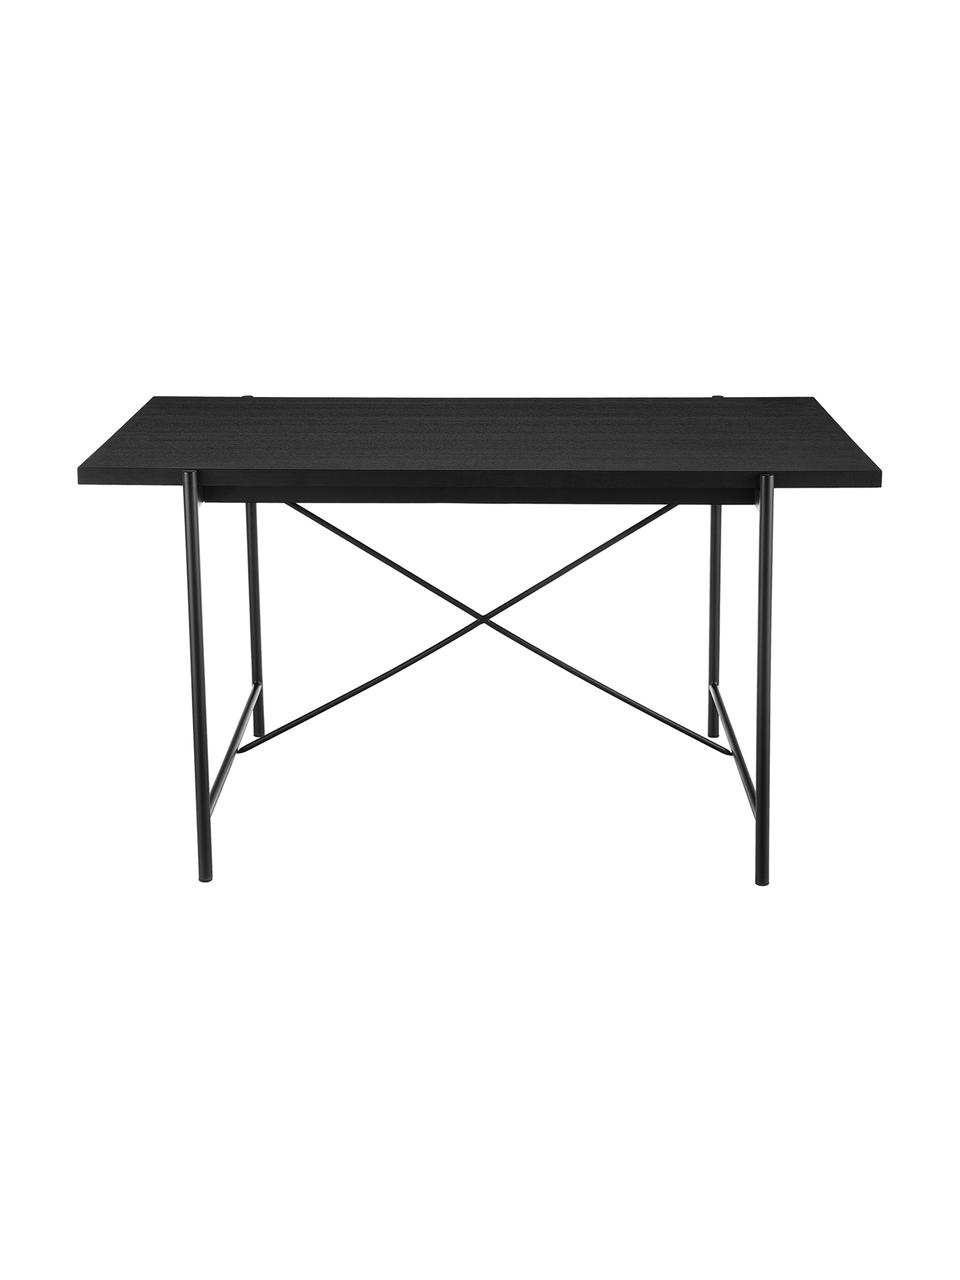 Jedálenský stôl s drevenou doskou Mica, Stolová doska: dubová dyha, lakovaná na čierno Nohy: matná čierna, Š 140 x H 90 cm